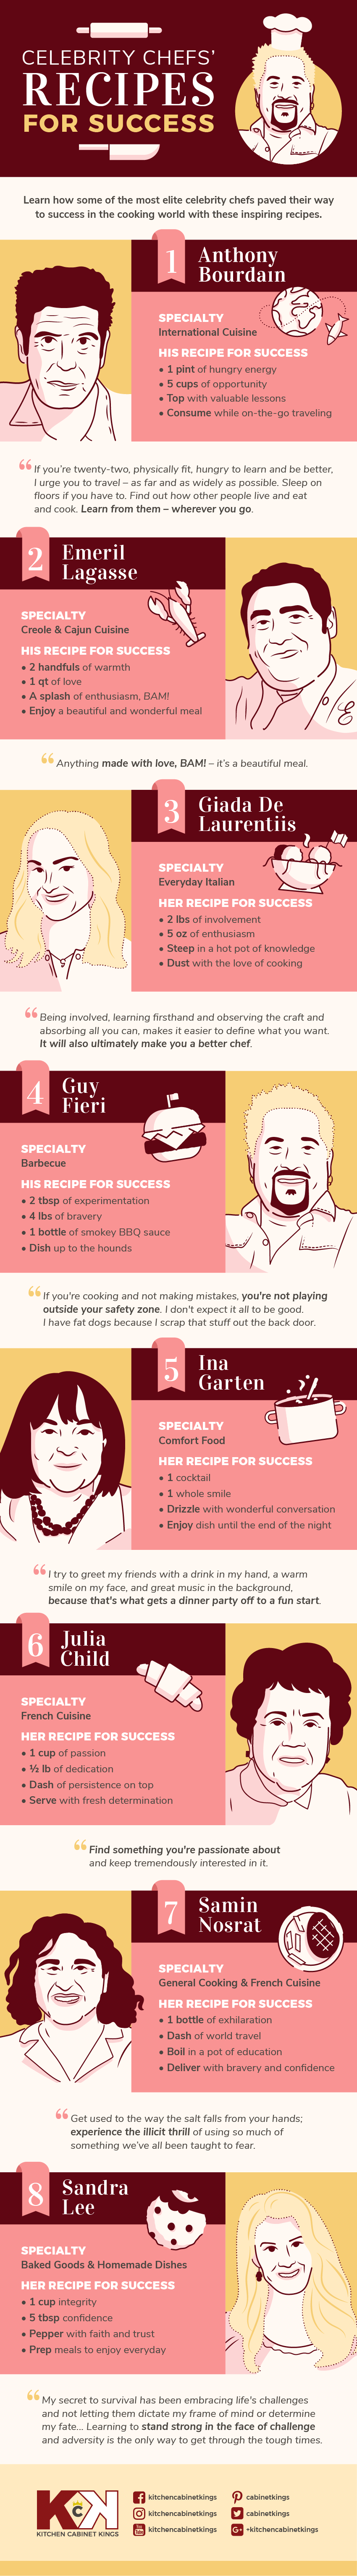 Celebrity Chefs' Recipes For Success